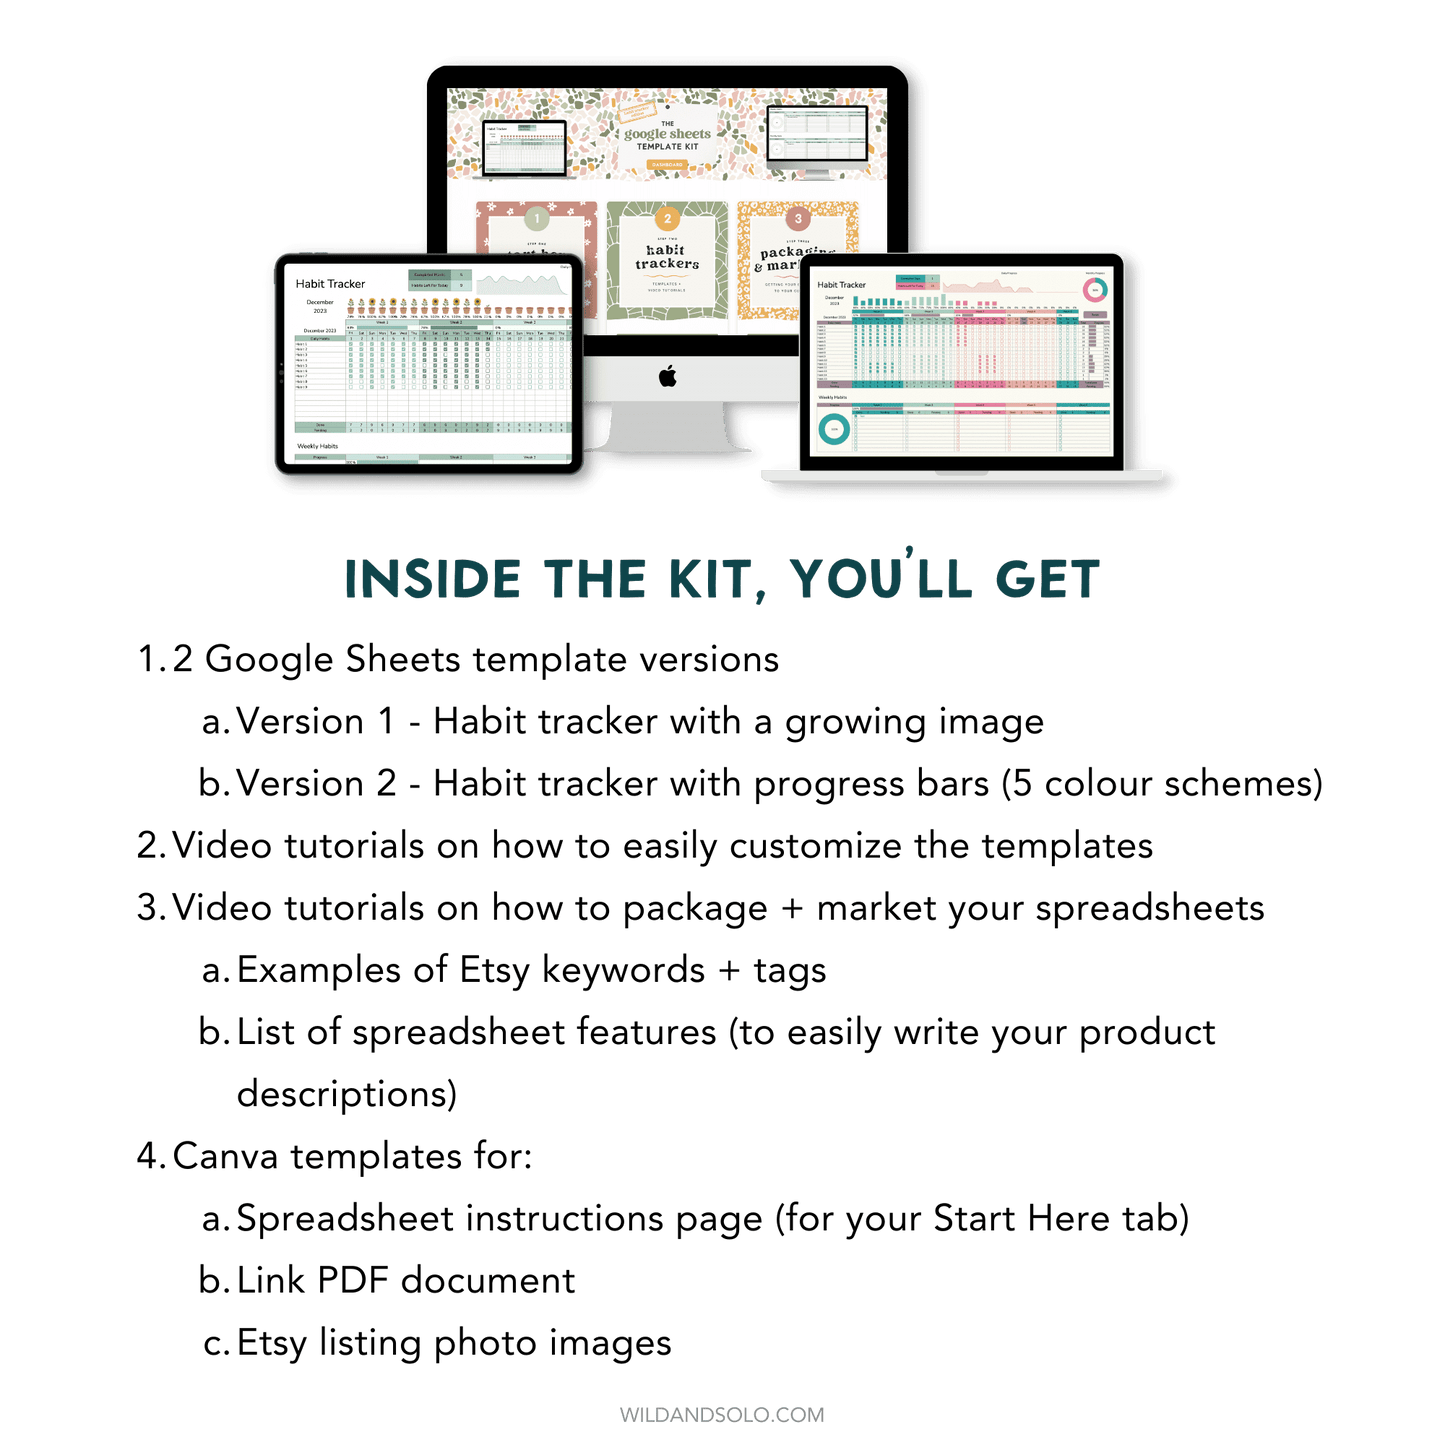 The Google Sheets Template Kit - Habit Tracker Edition